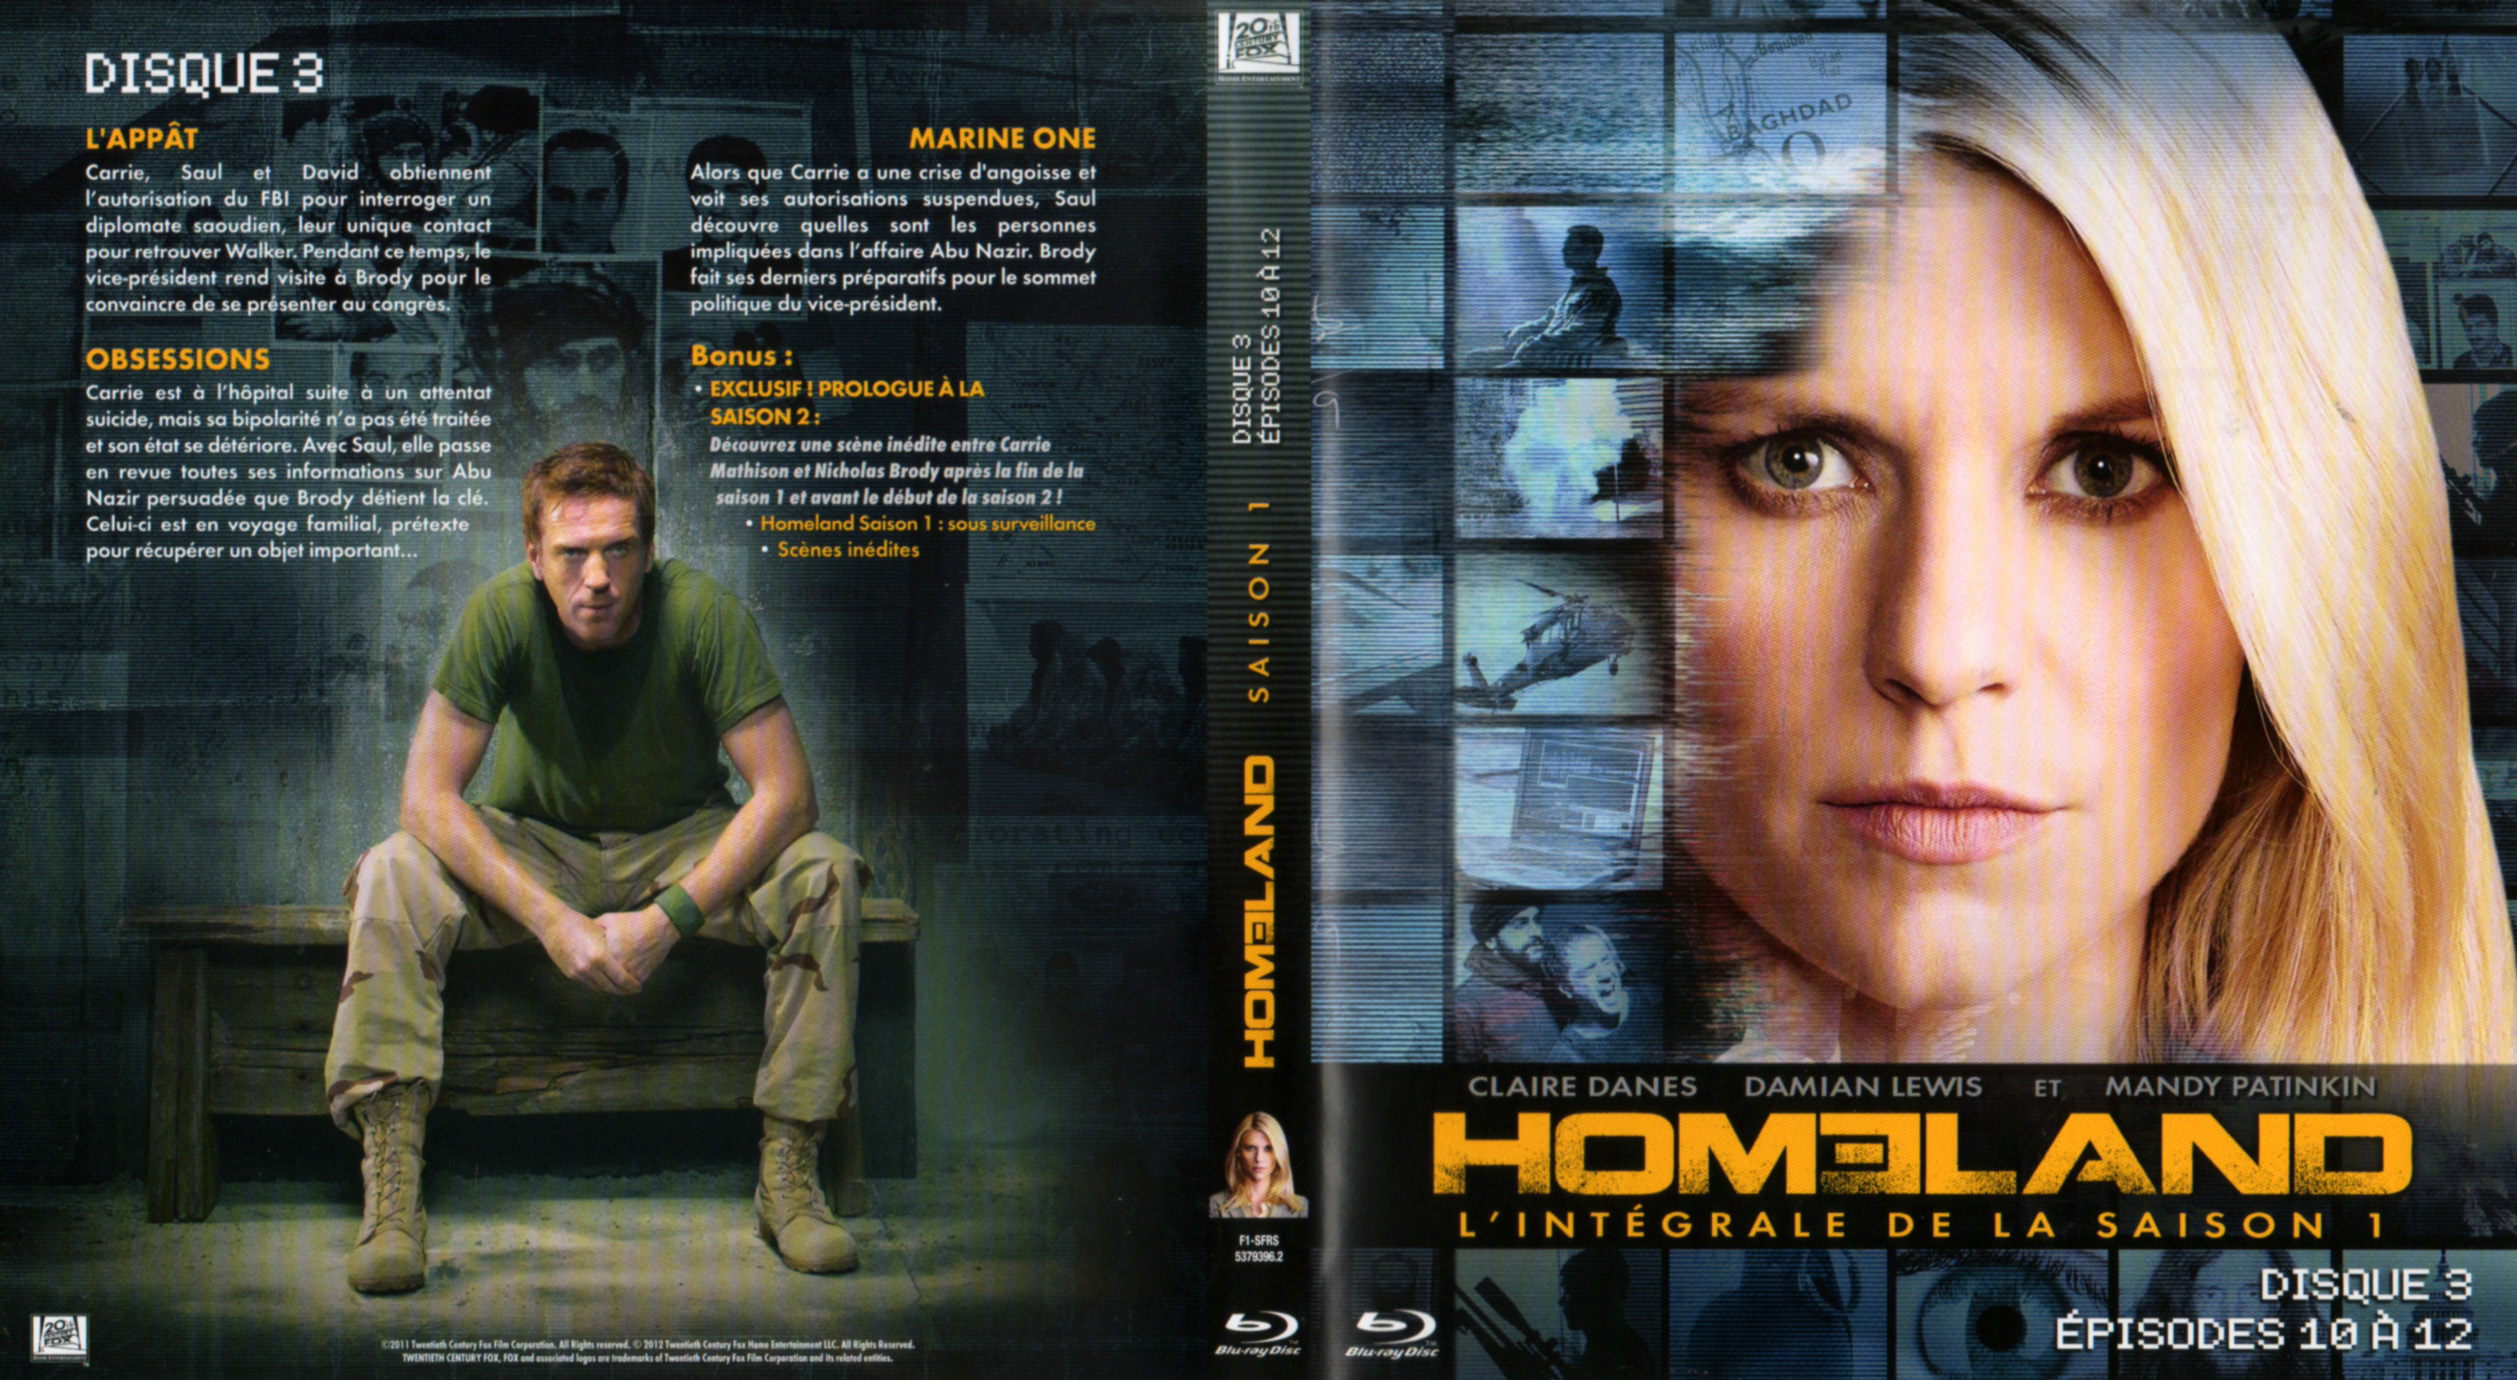 Jaquette DVD Homeland saison 1 DISC 2 (BLU-RAY)